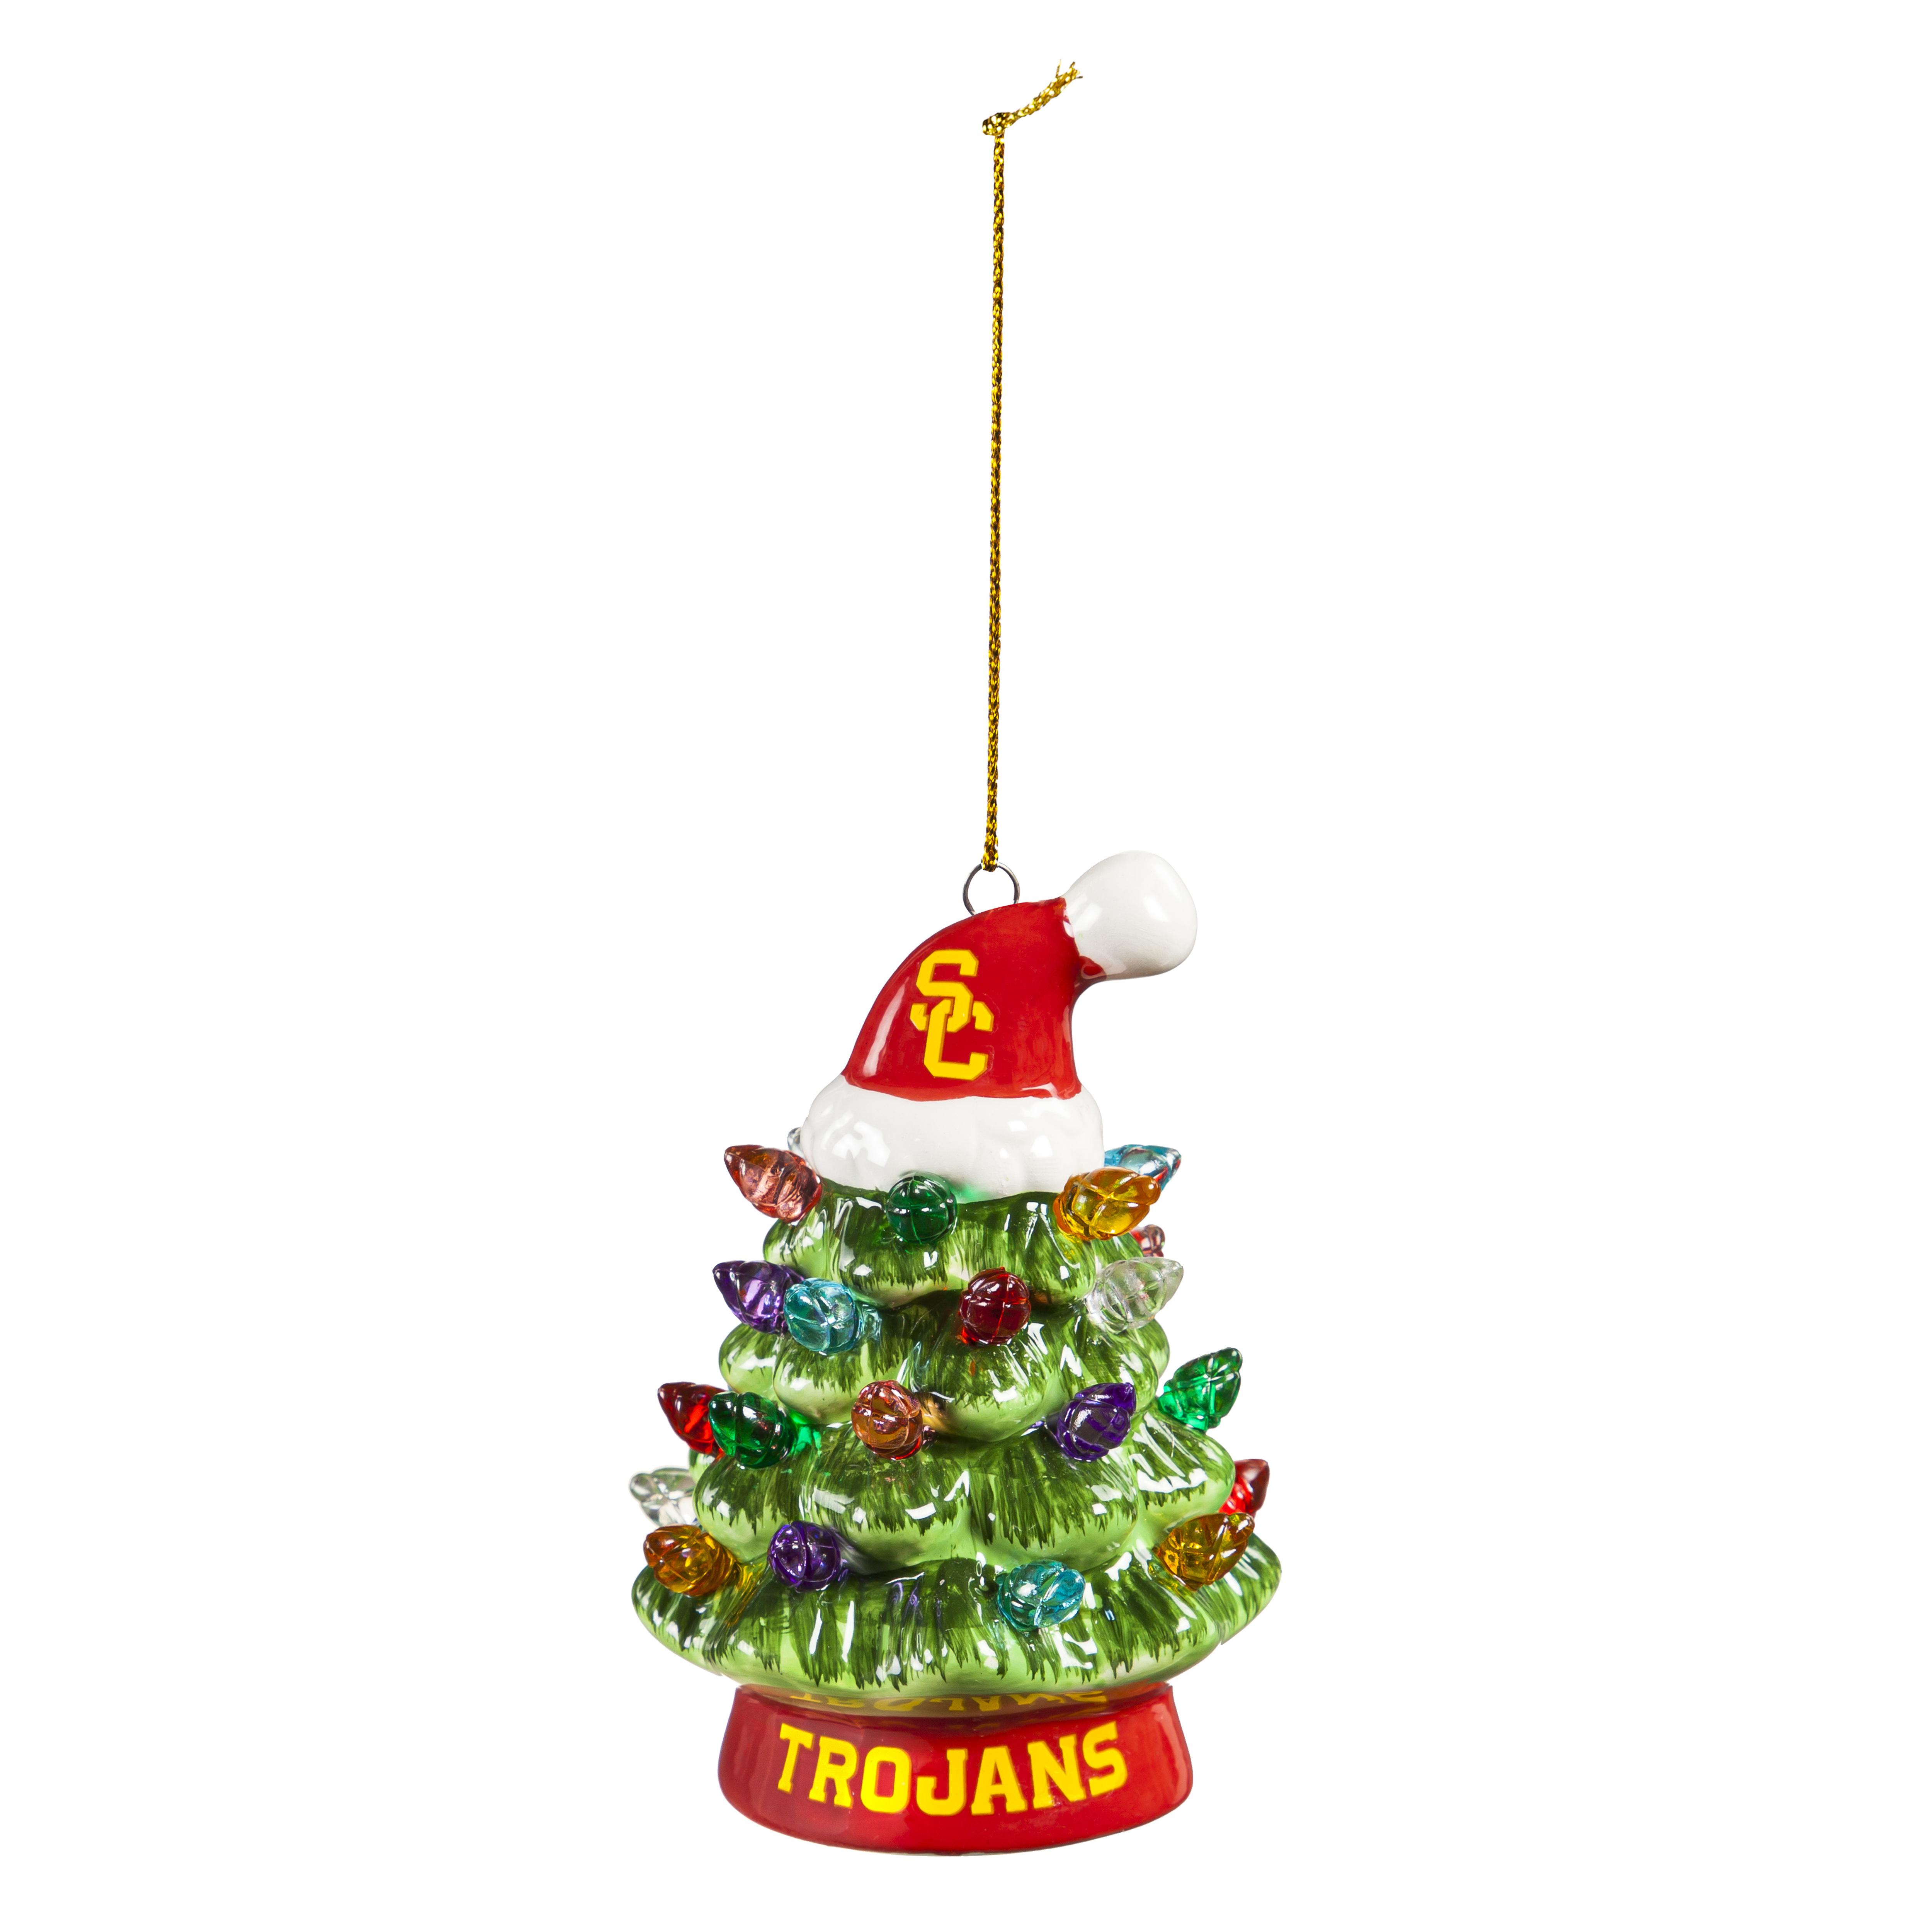 SC Interlock Trojans Light Up Christmas Tree Ornament by Evergreen image01